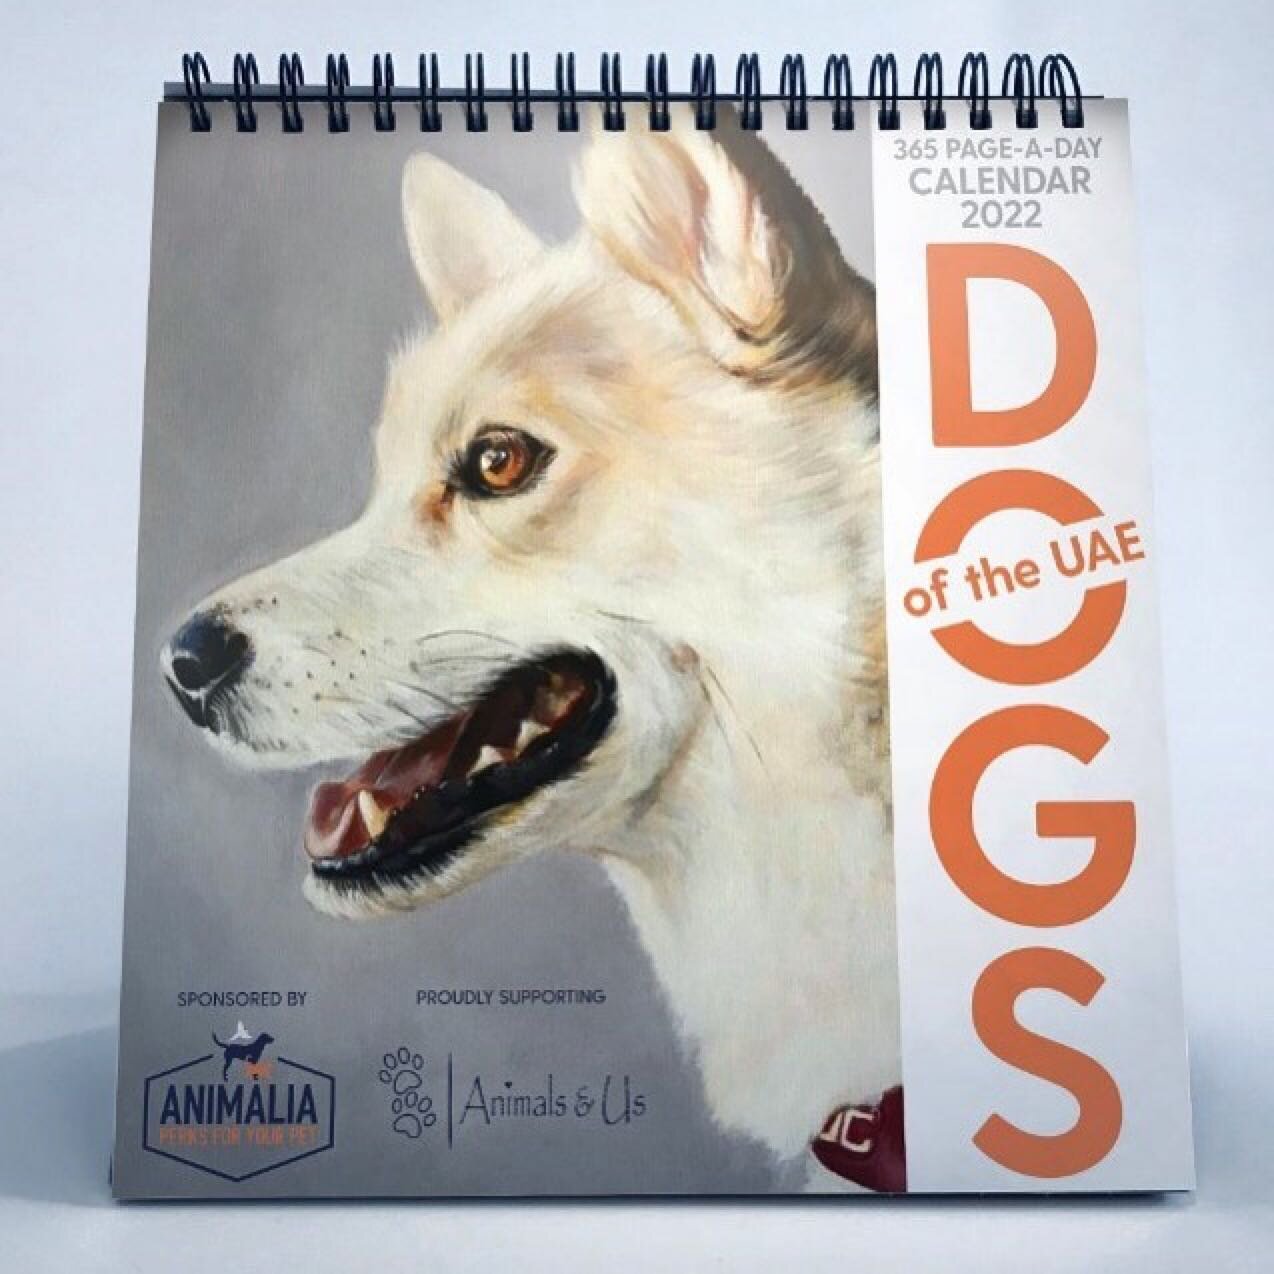 IT&rsquo;S BACK! Dogs of the UAE Calendar 2022&hellip; details coming soon #calendar #2022 #expo2020dubai #dogsuae #dogsindubai #dogsabudhabi @mrpomsky @alexgoddardart @myanimaliaclub @animalsandusfuj